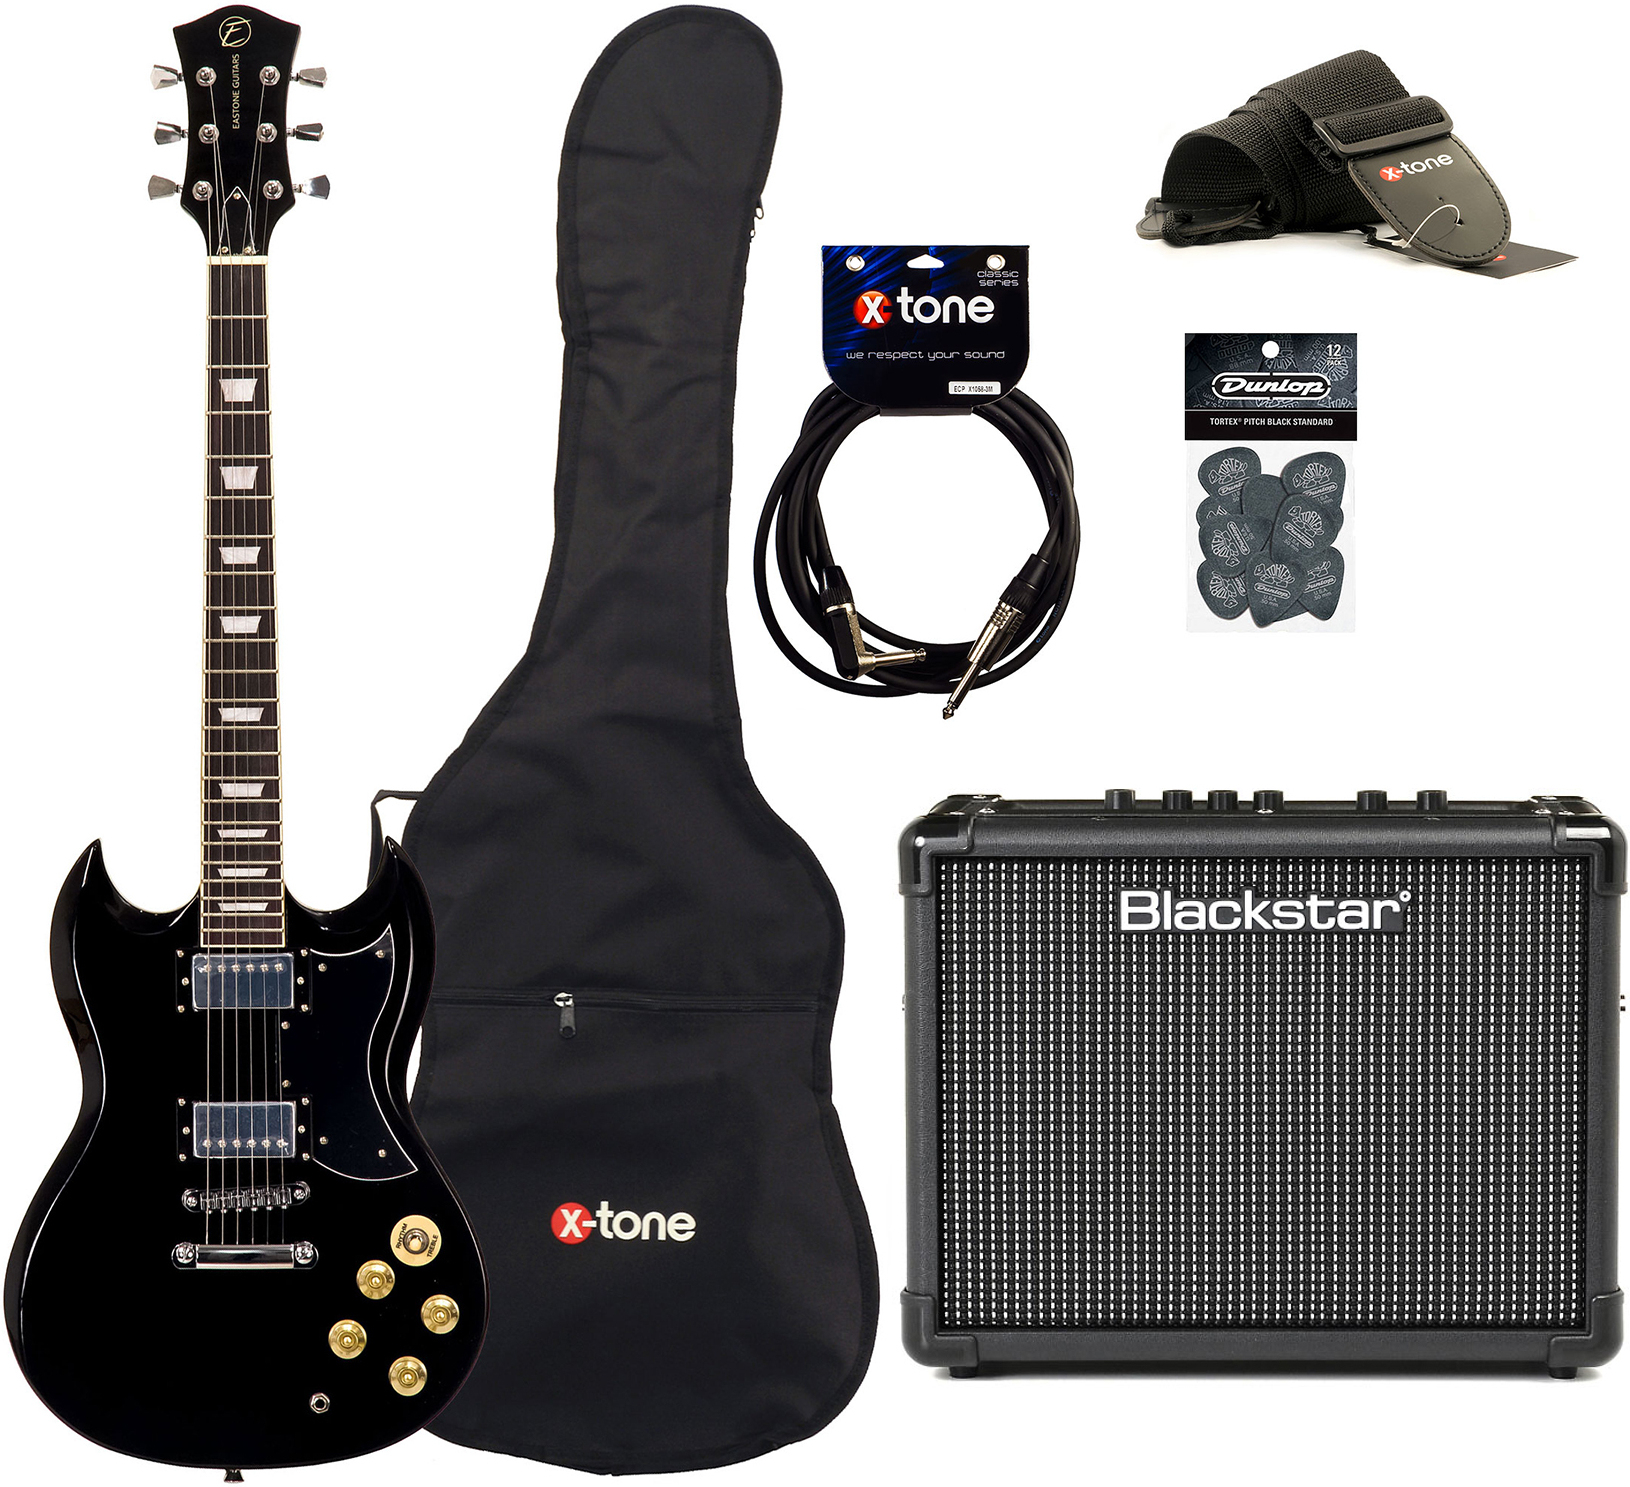 Eastone Sdc70 +blackstar Id Core Stereo 10 V3 +cable +housse +courroie +mediators - Black - Electric guitar set - Main picture